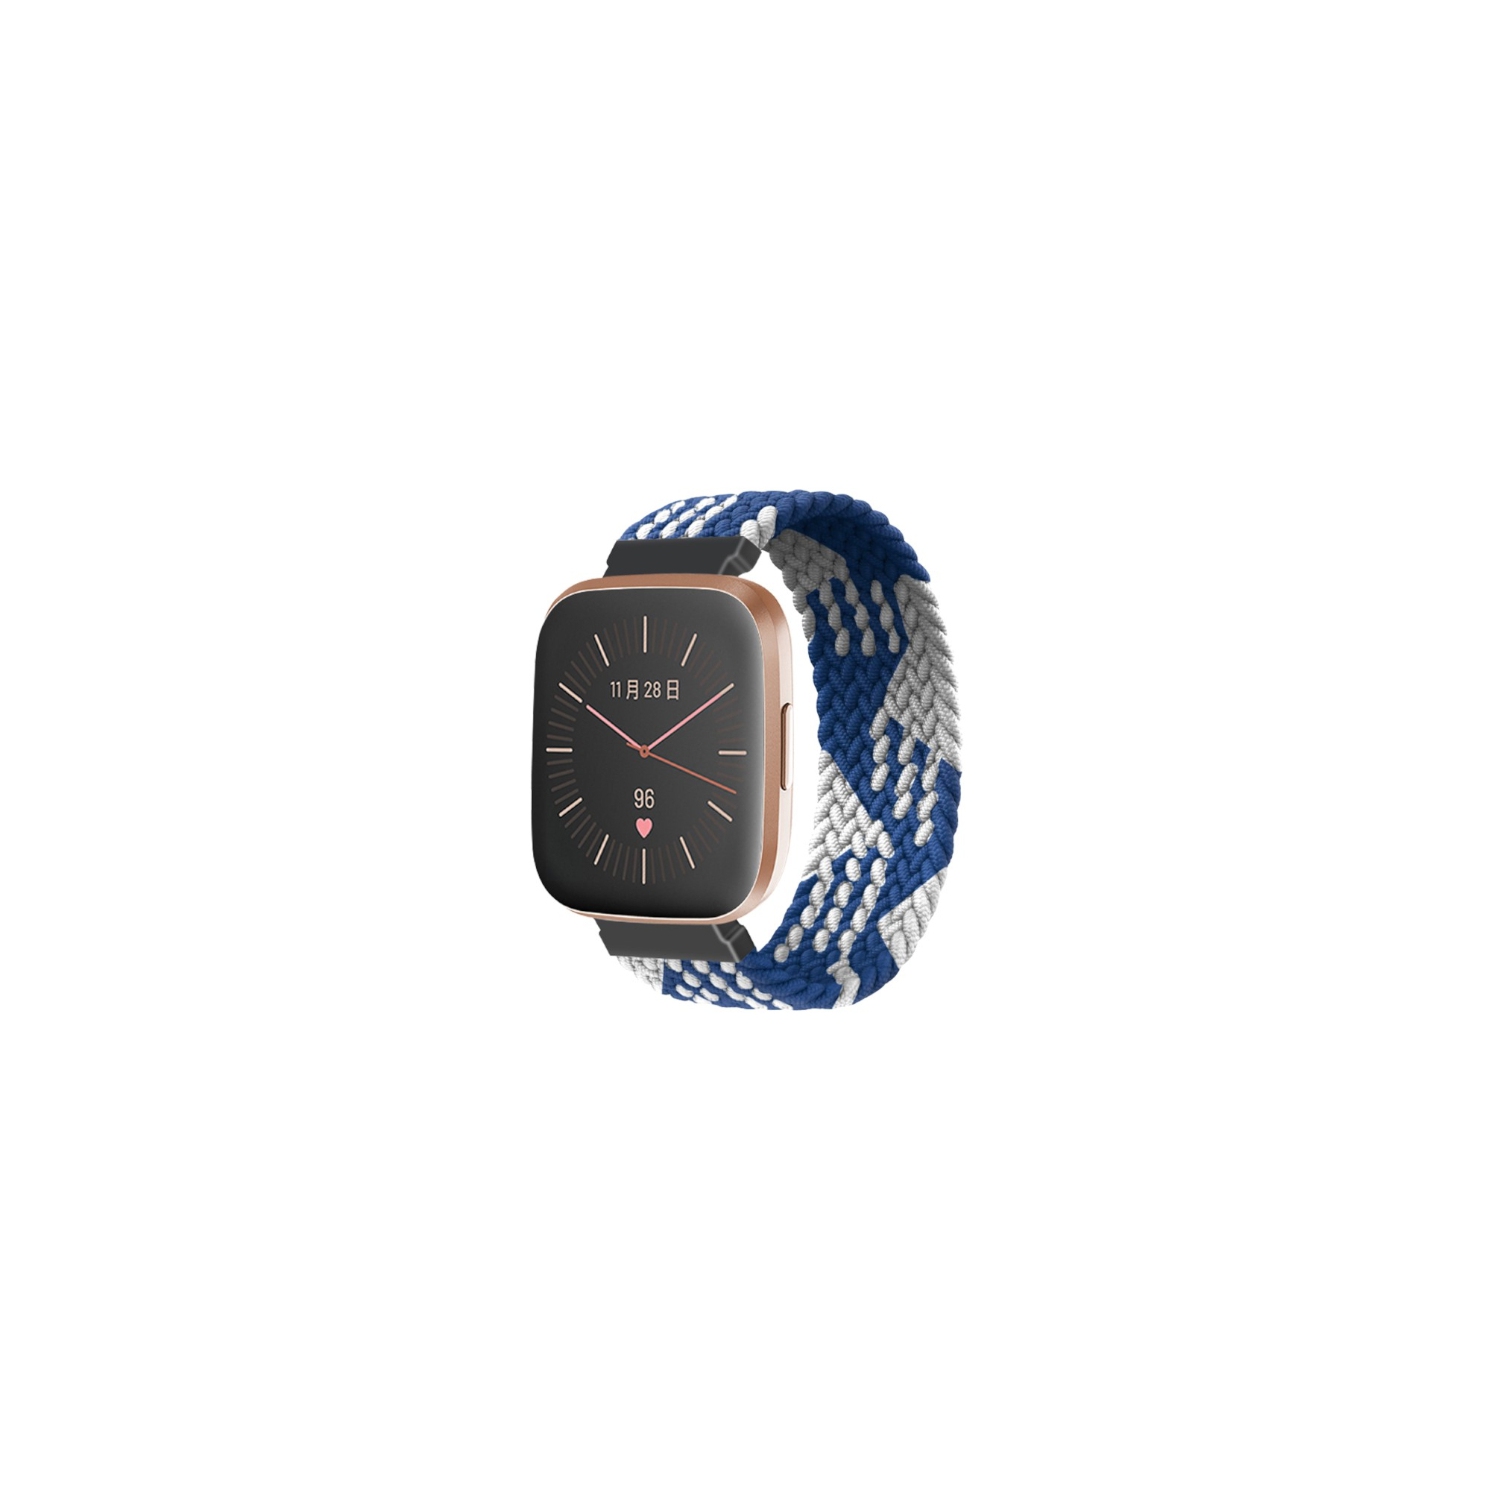 StrapsCo Patterned Elastic Nylon Watch Band Strap for Fitbit Versa & Versa 2 - M - Fits 6.2" - 6.5" Wrist - Blue & White Buffalo